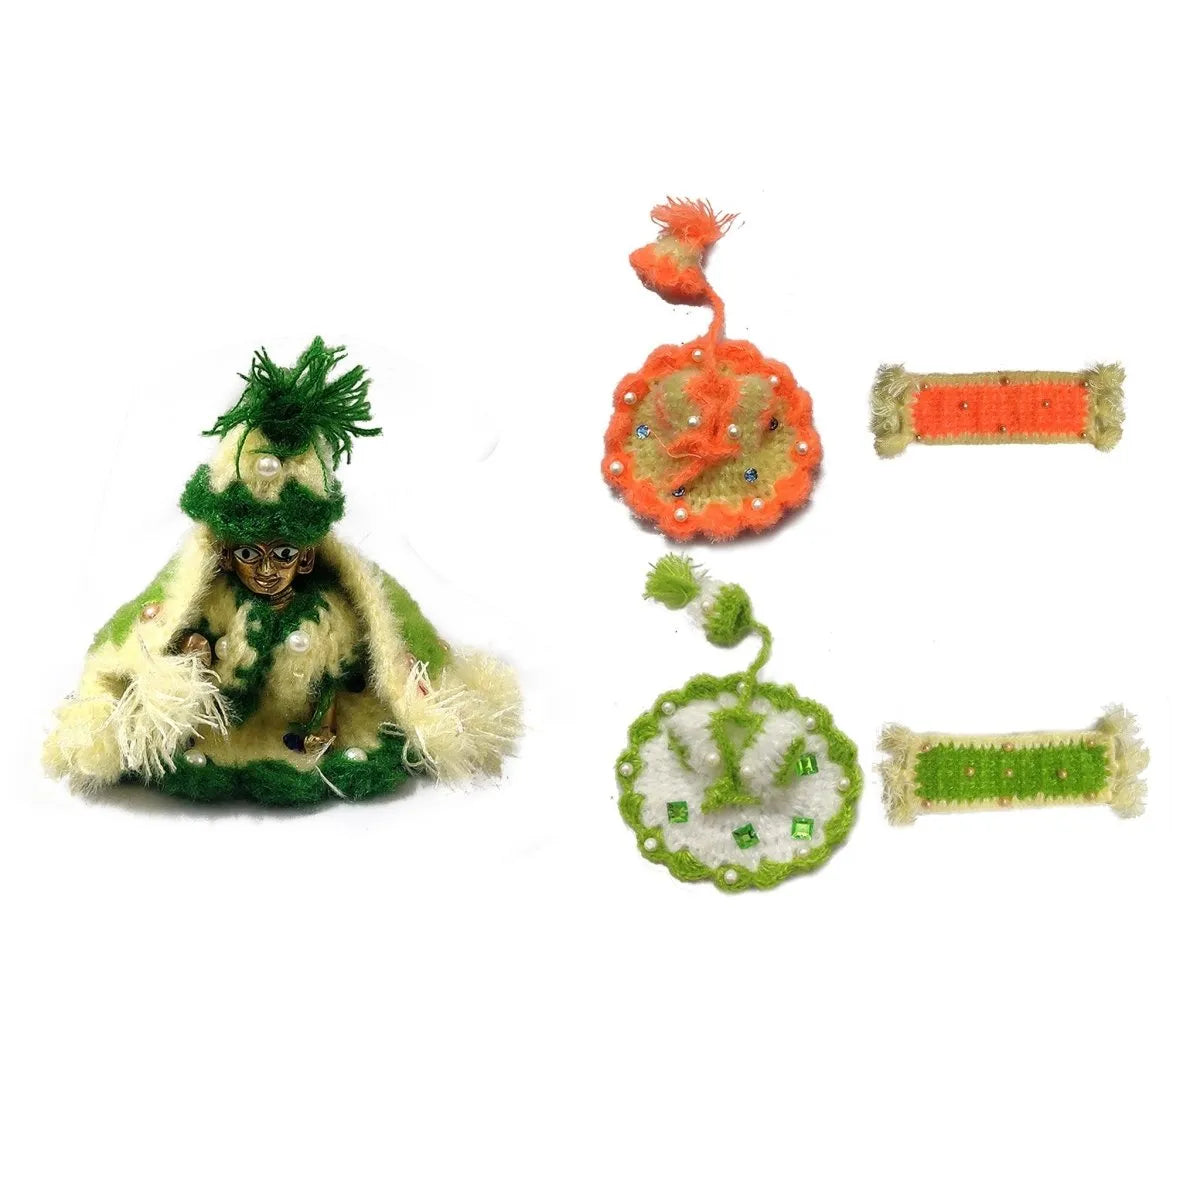 Laddu Gopal Woolen Winter Dress with Shawl | Bal Gopal Woolen Dress (Graan & Orange) | Kanha Ji Winter Dress (Size 2,4) Set of 2